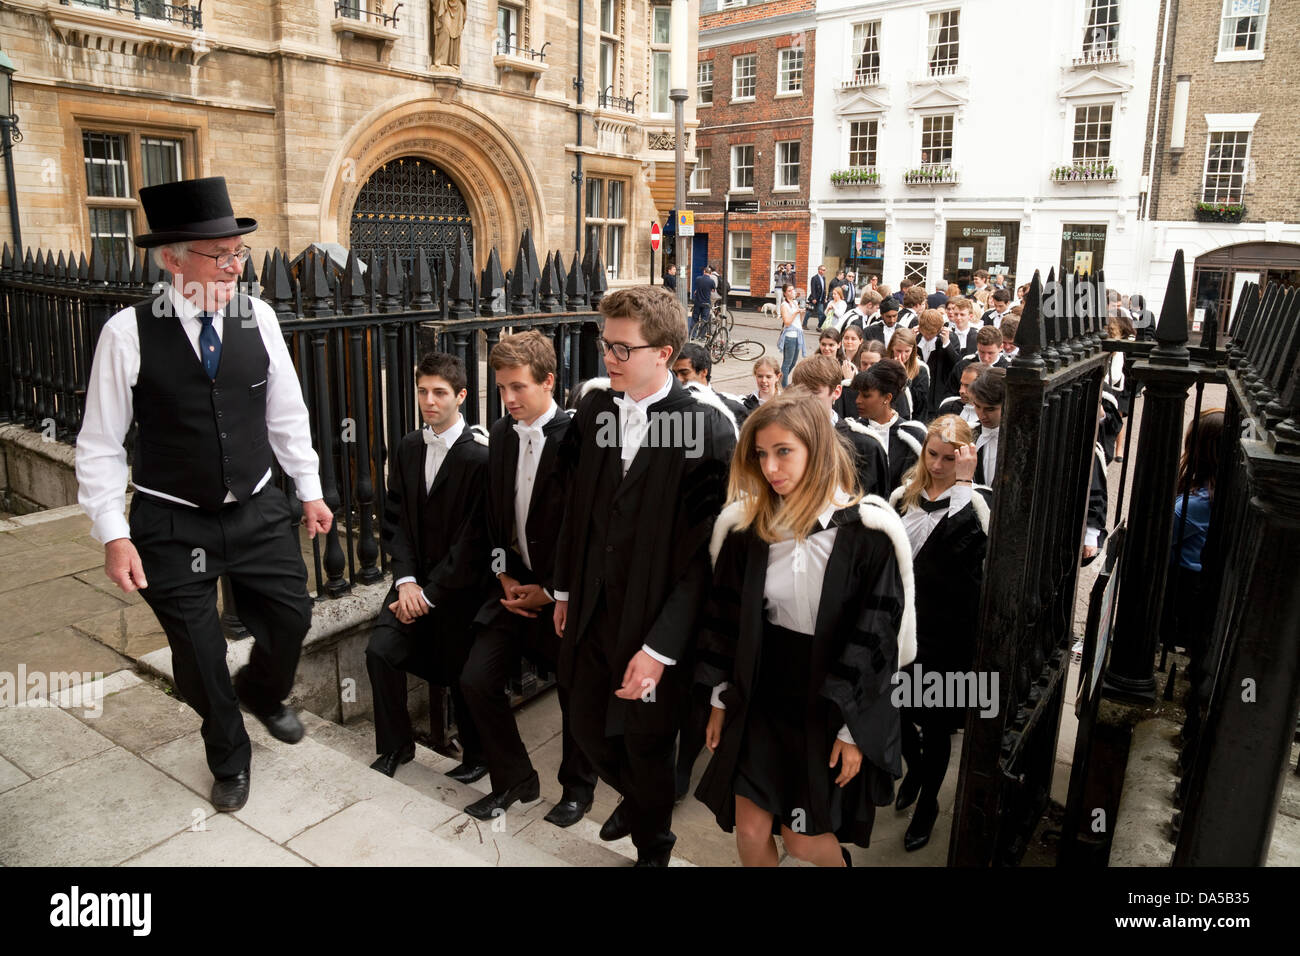 Graduation day ceremony - Graduates graduating, entering the Senate House, Cambridge University, England UK Stock Photo